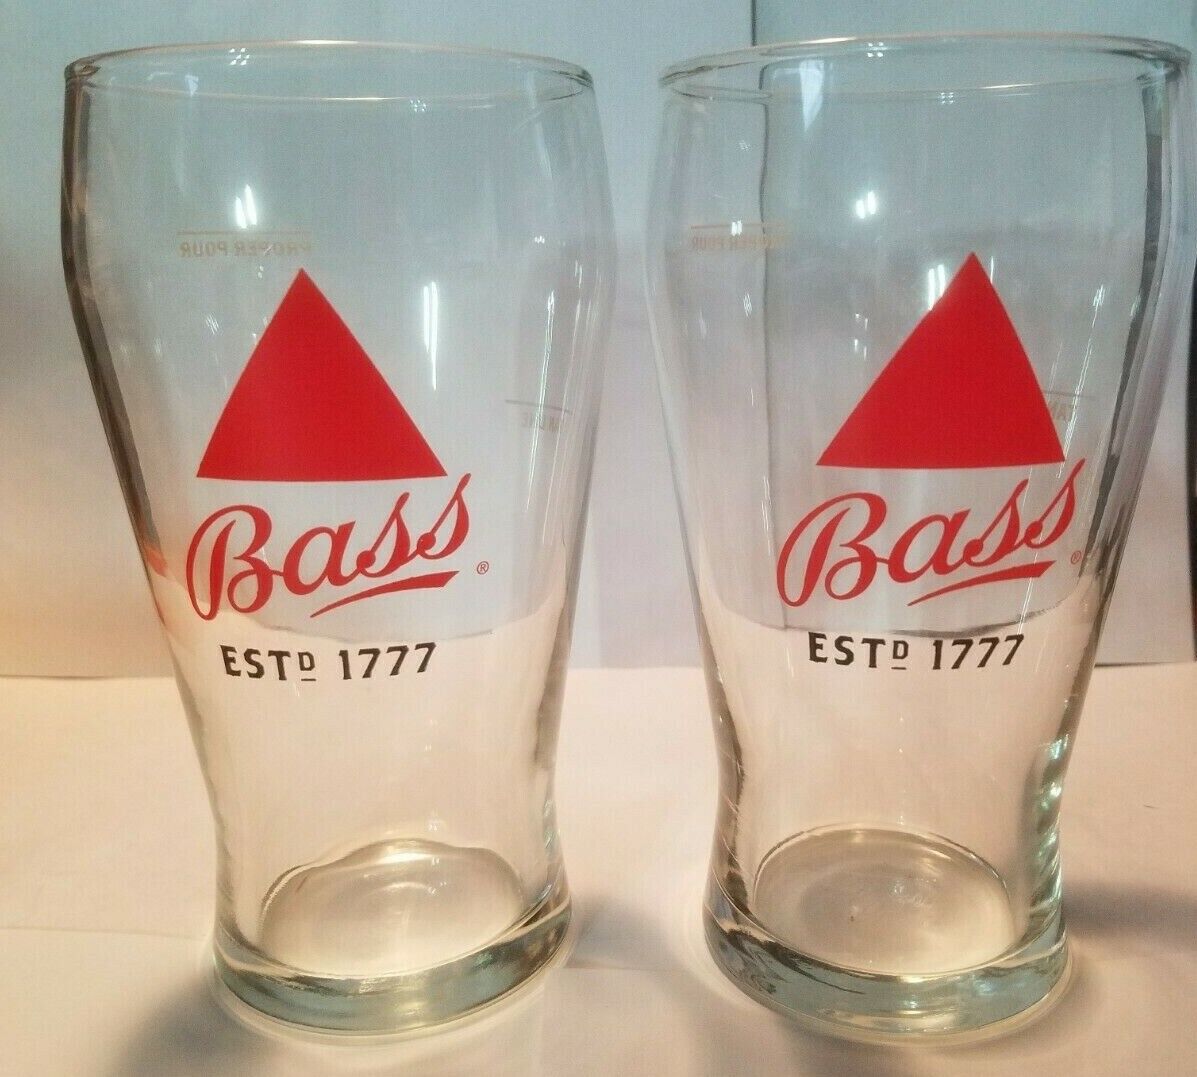 Lot of 2 Bass EST d 1777 Bier Beer Glasses 16oz